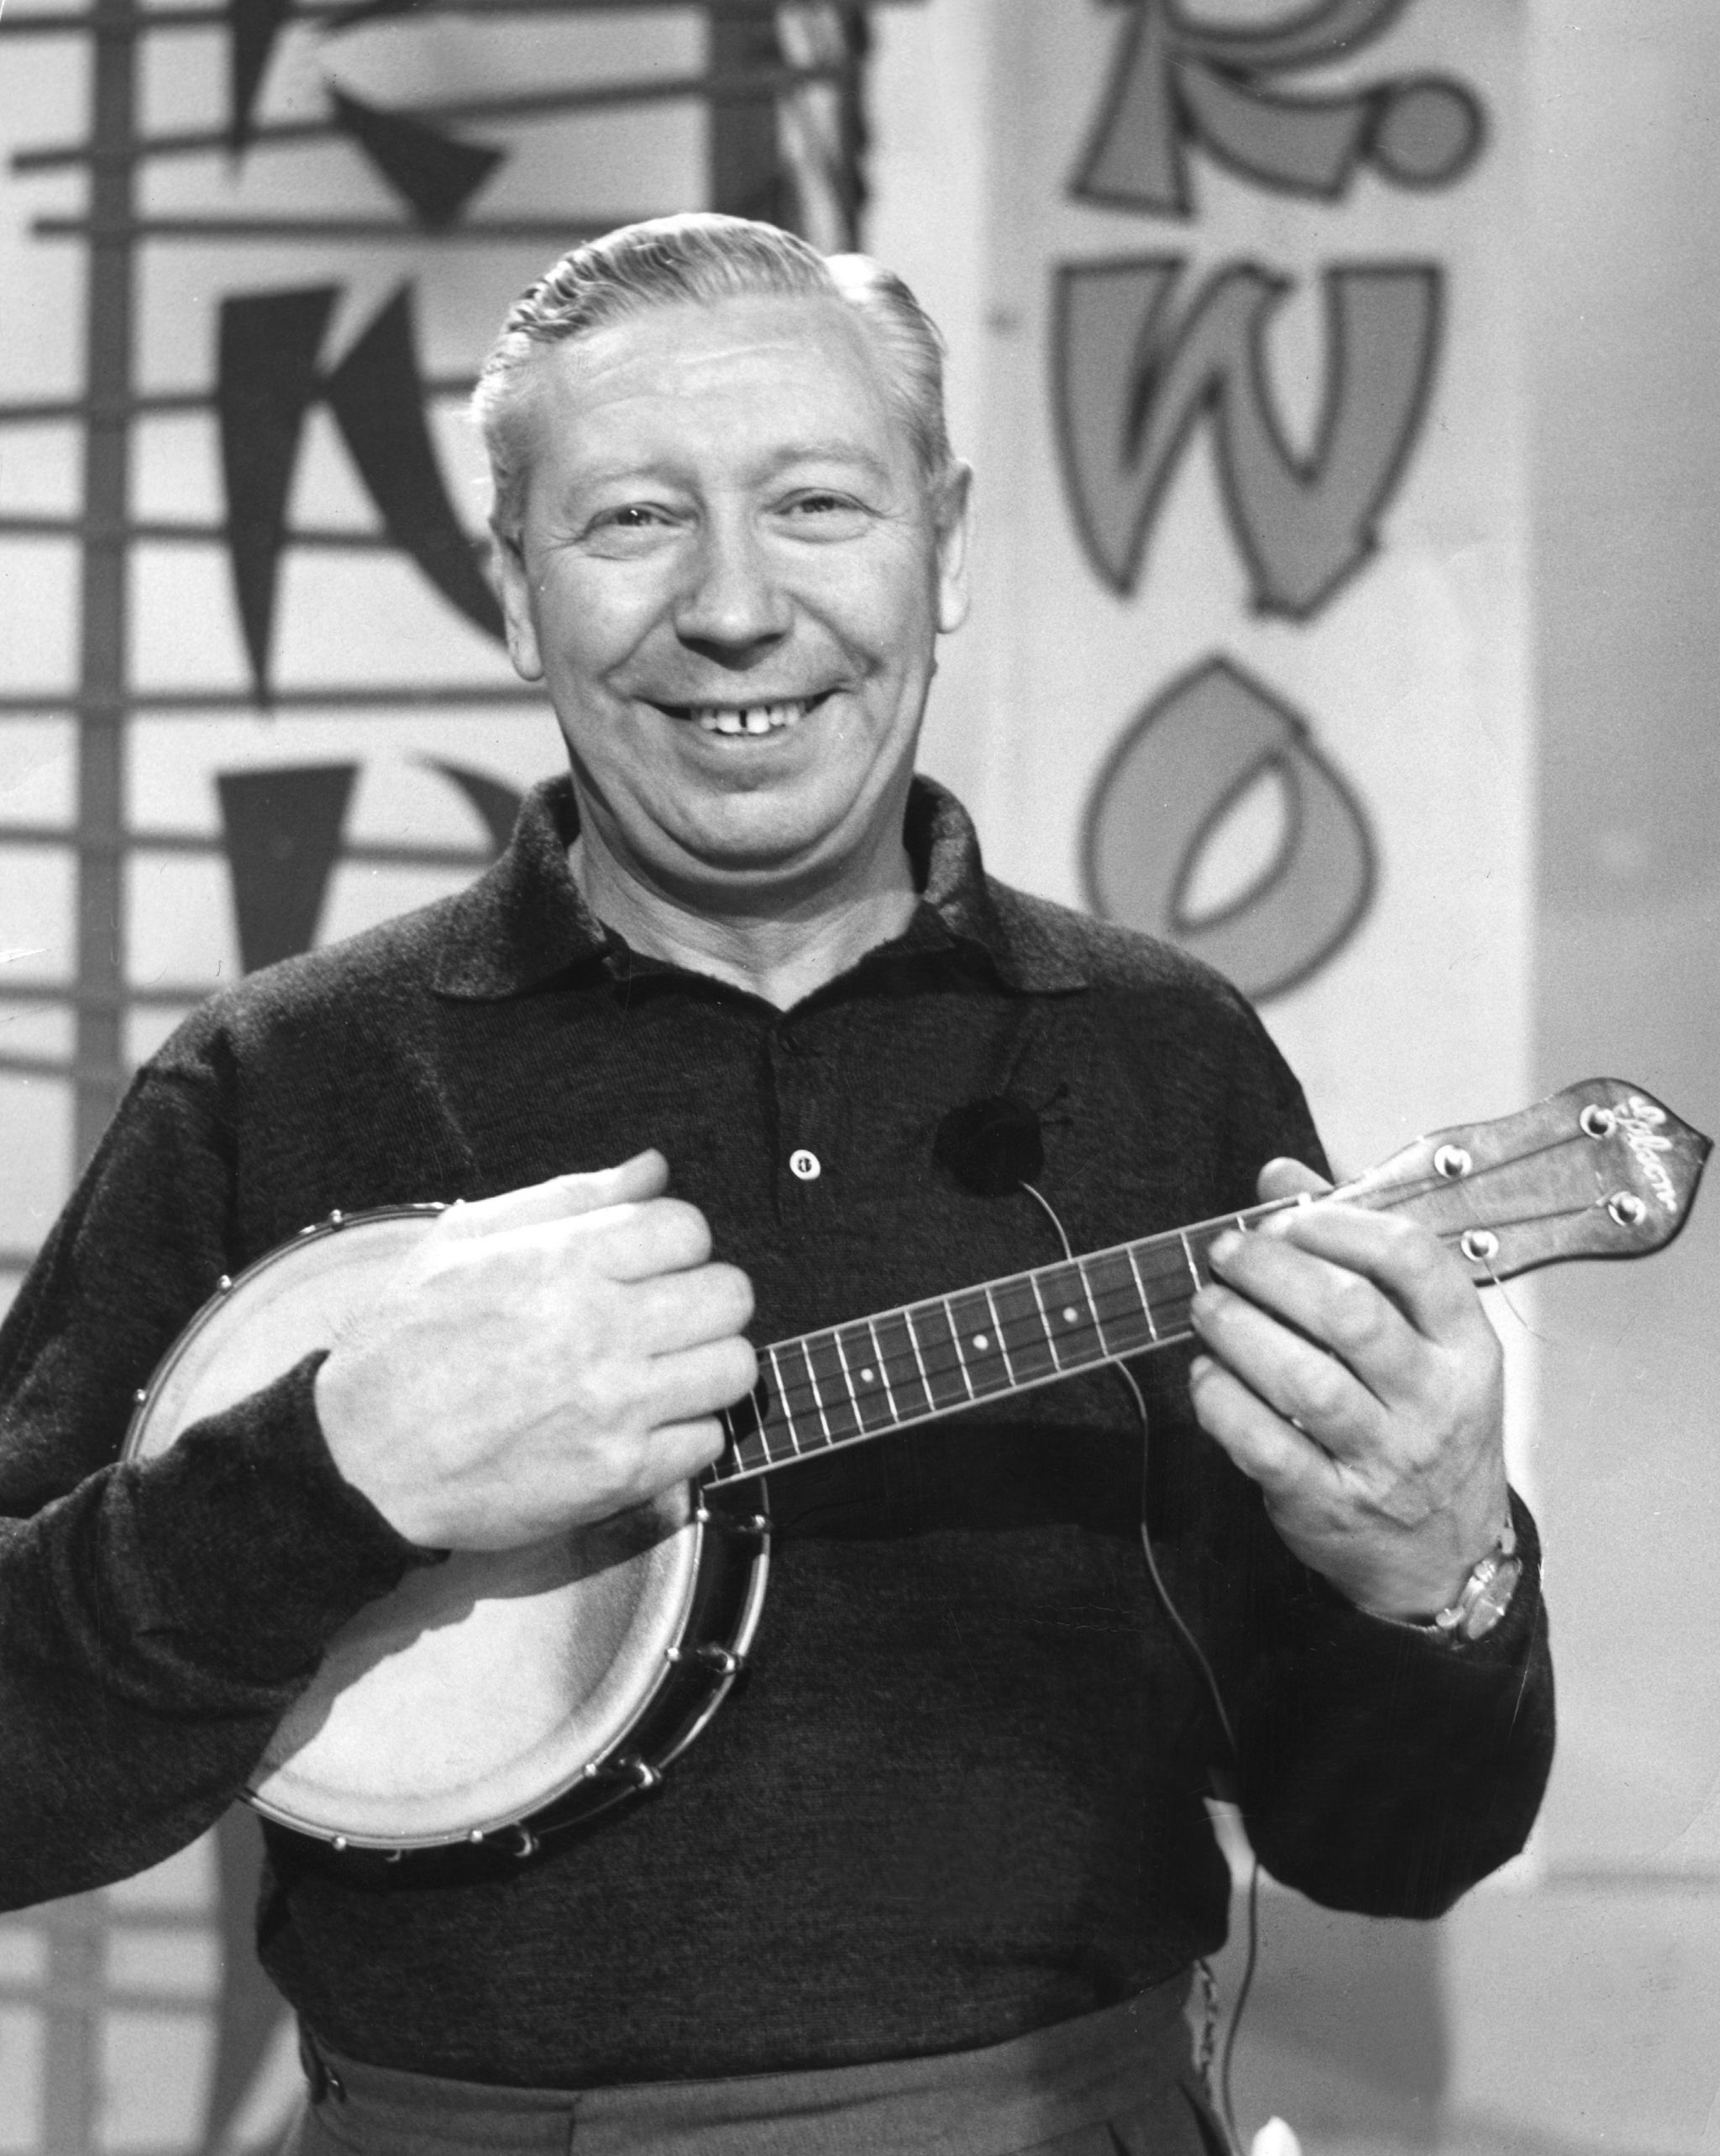 George banjo ukulele be sold at auction - News